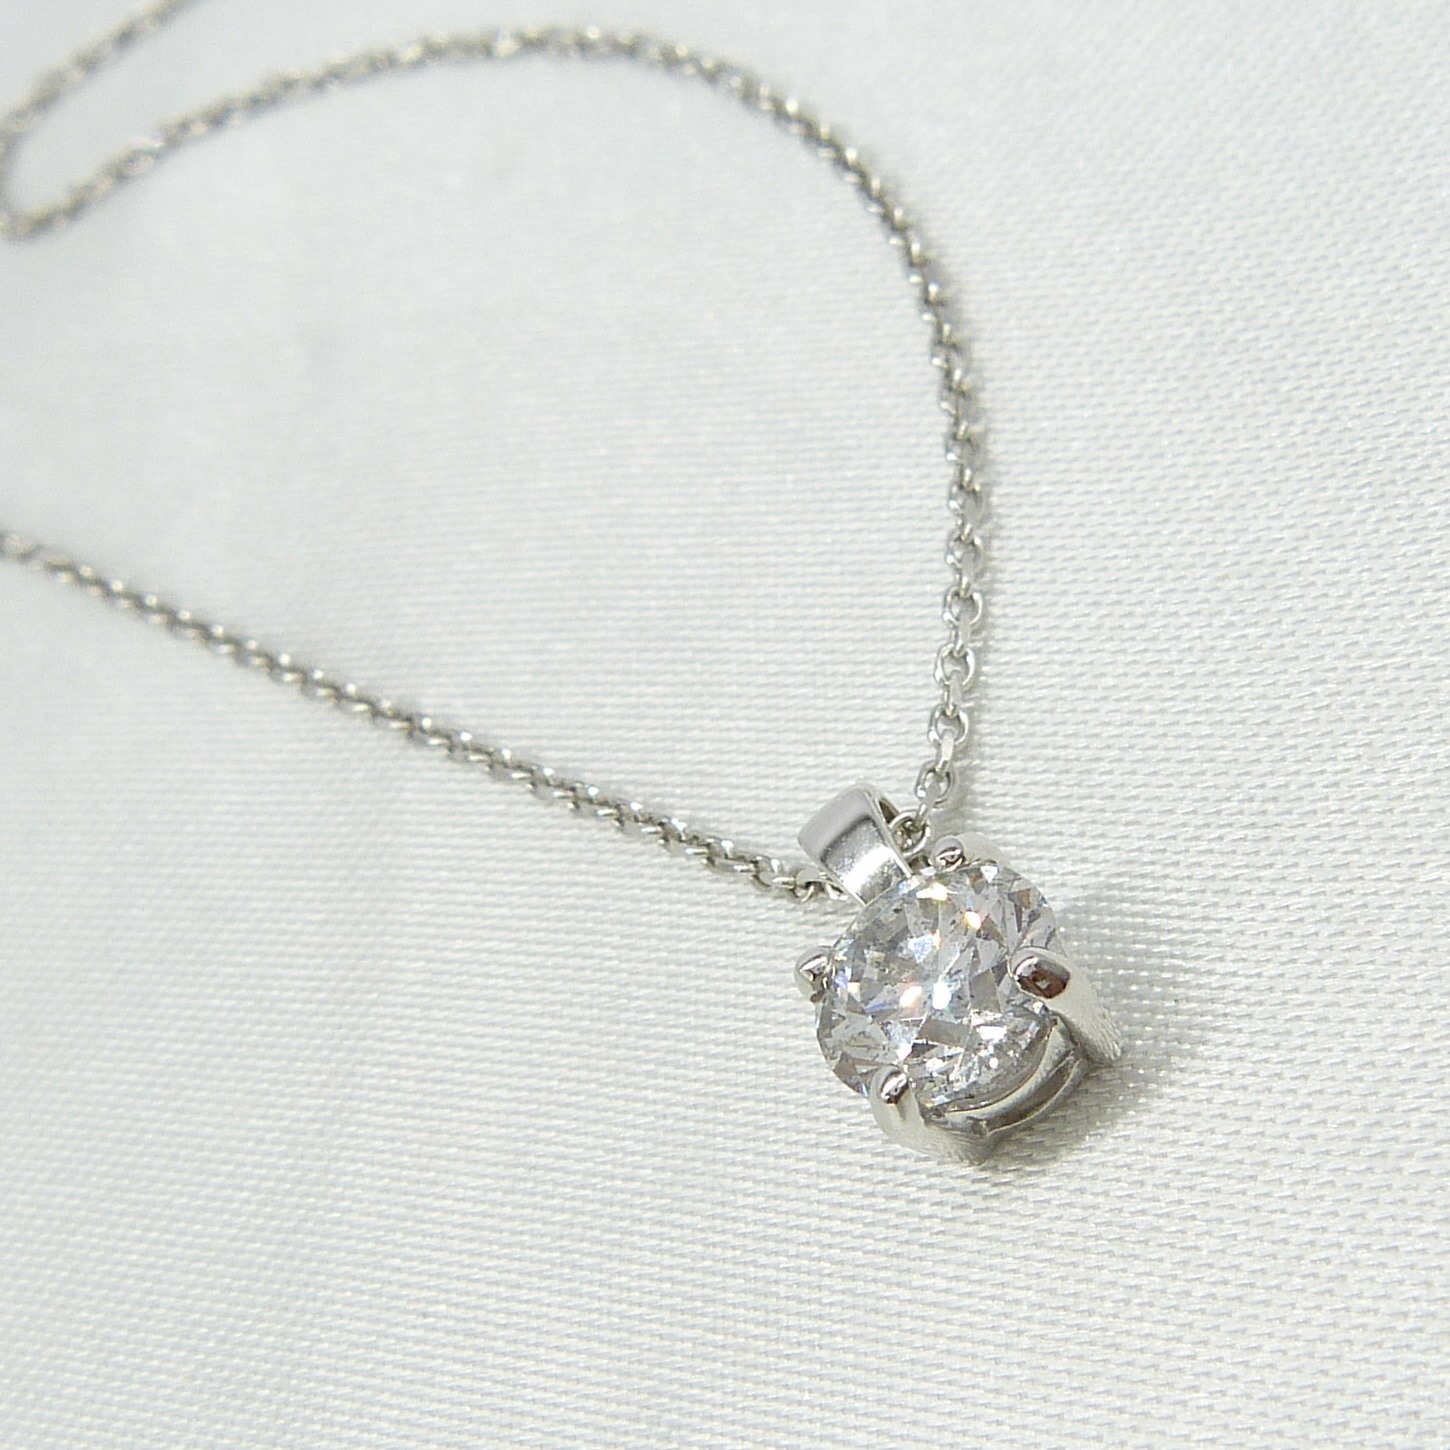 Certificated 1.24 carat, E colour round brilliant-cut diamond solitaire necklace, 18ct white gold - Image 5 of 9